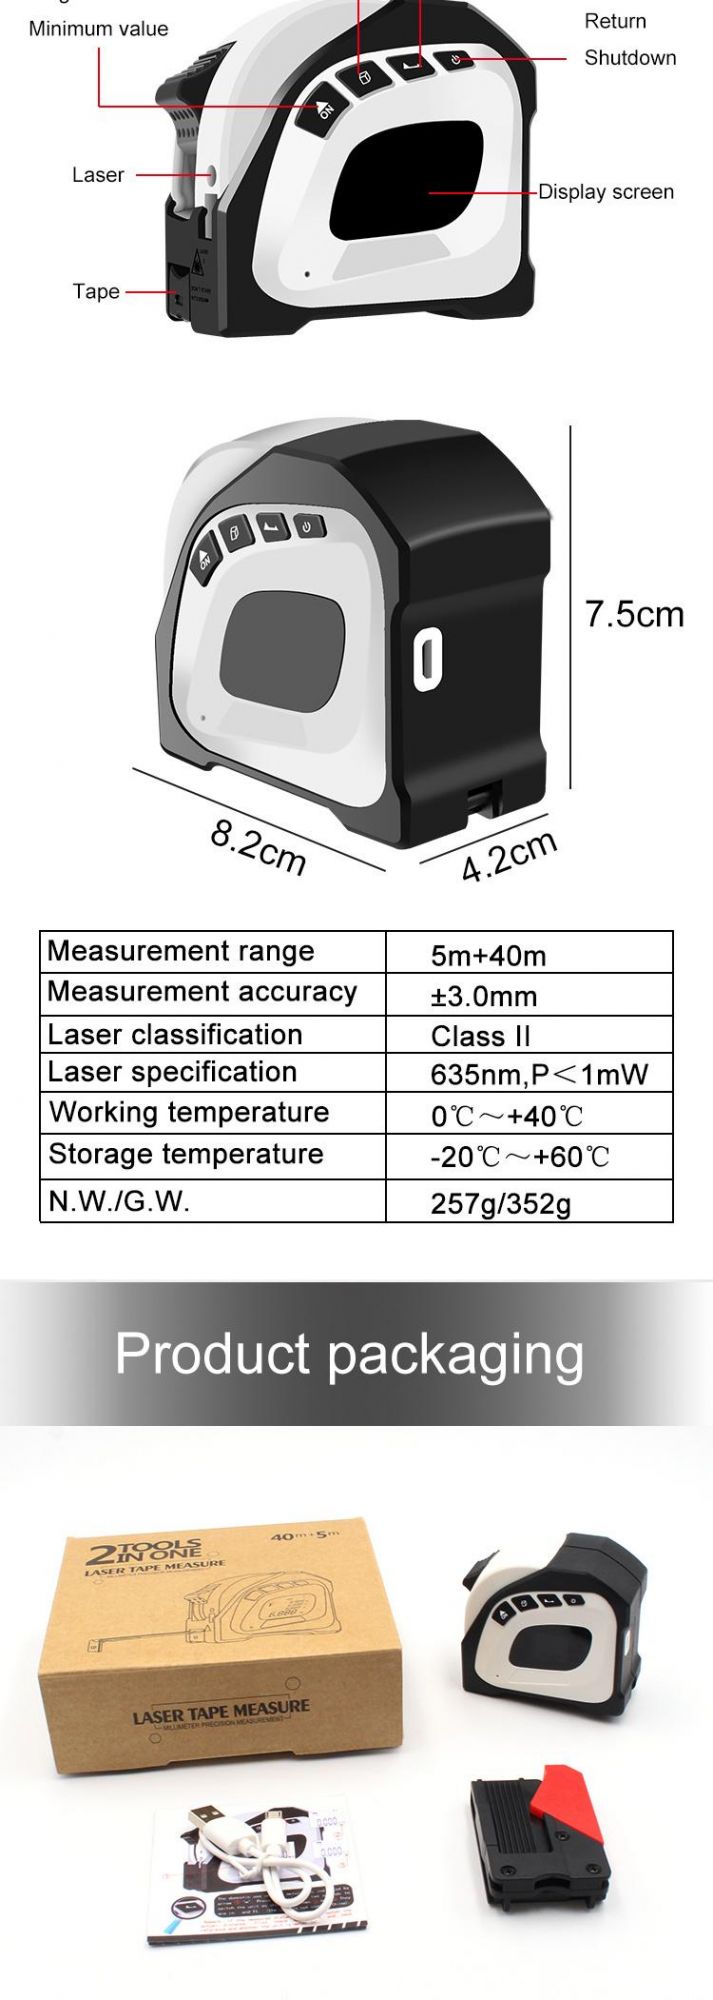 Factory 40m Digital 2 in 1 Laser Tape Measure with 5m Ruler